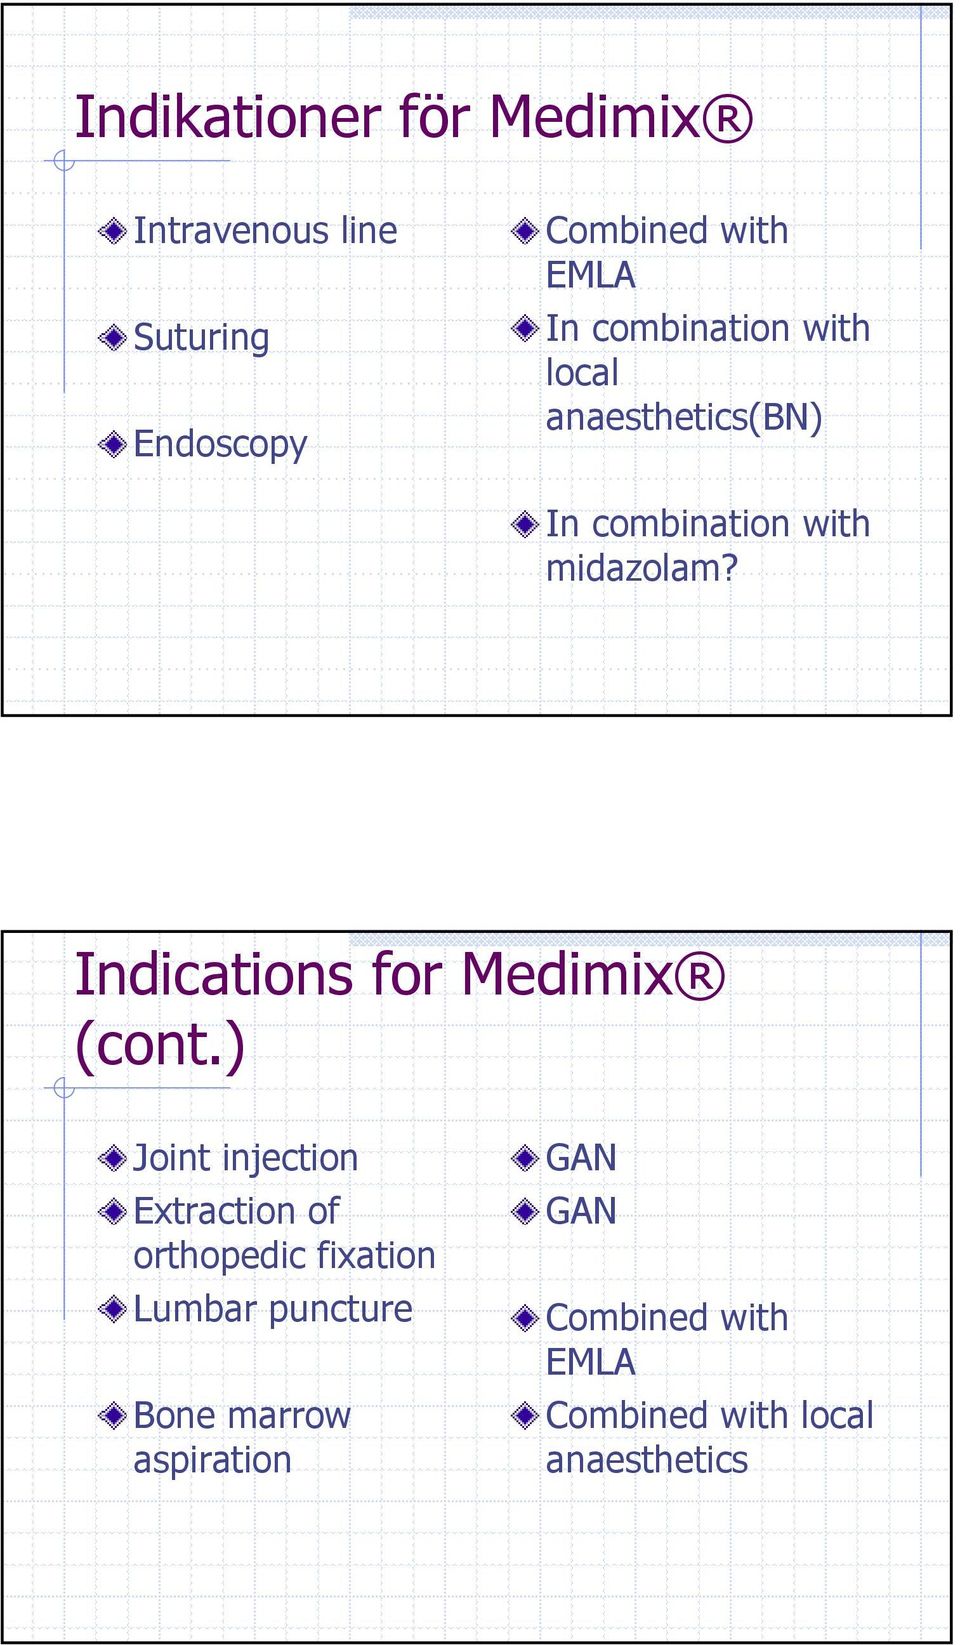 Indications for Medimix (cont.